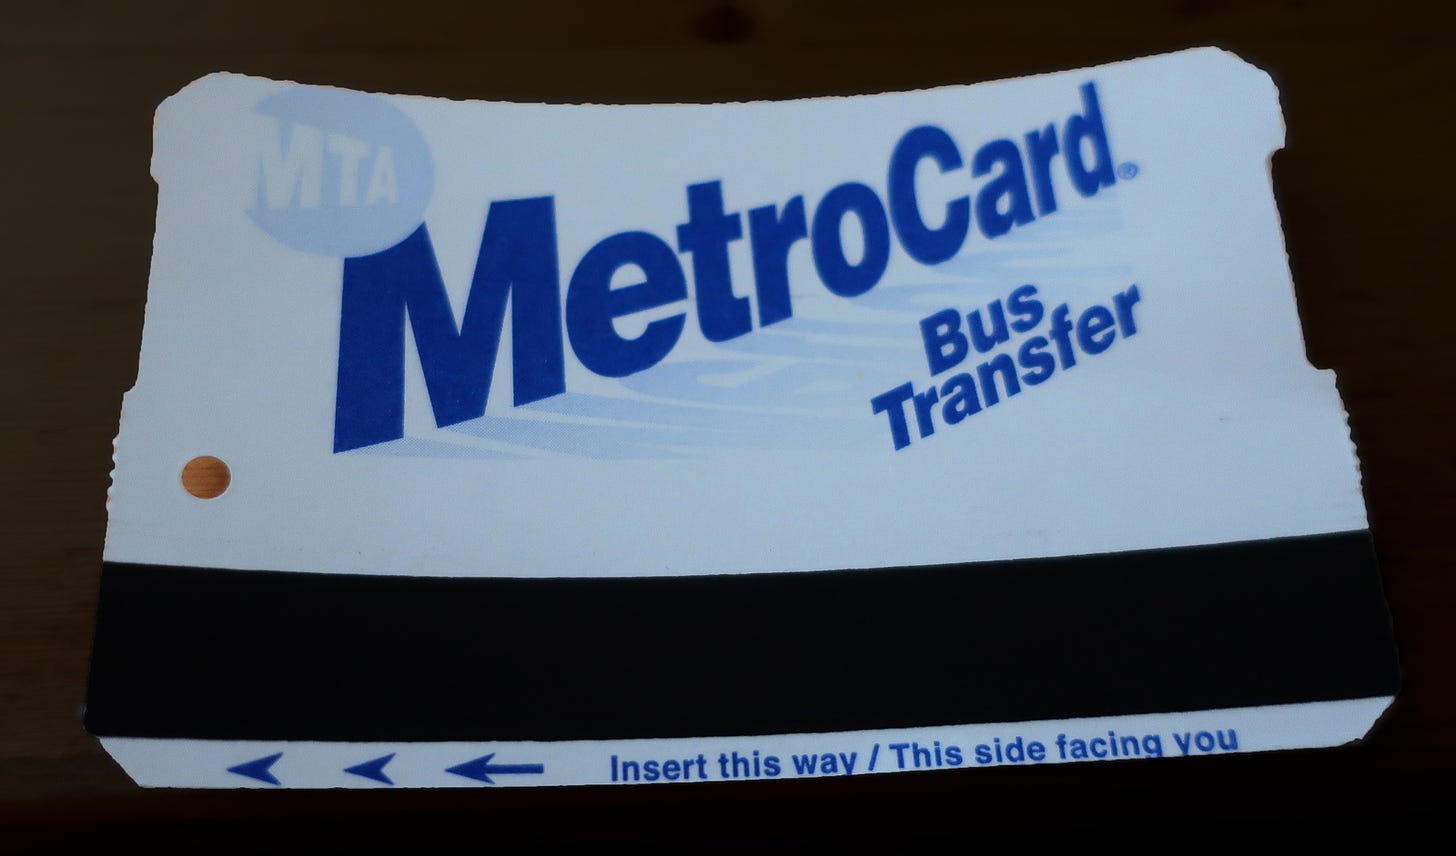 MetroCard bus transfer